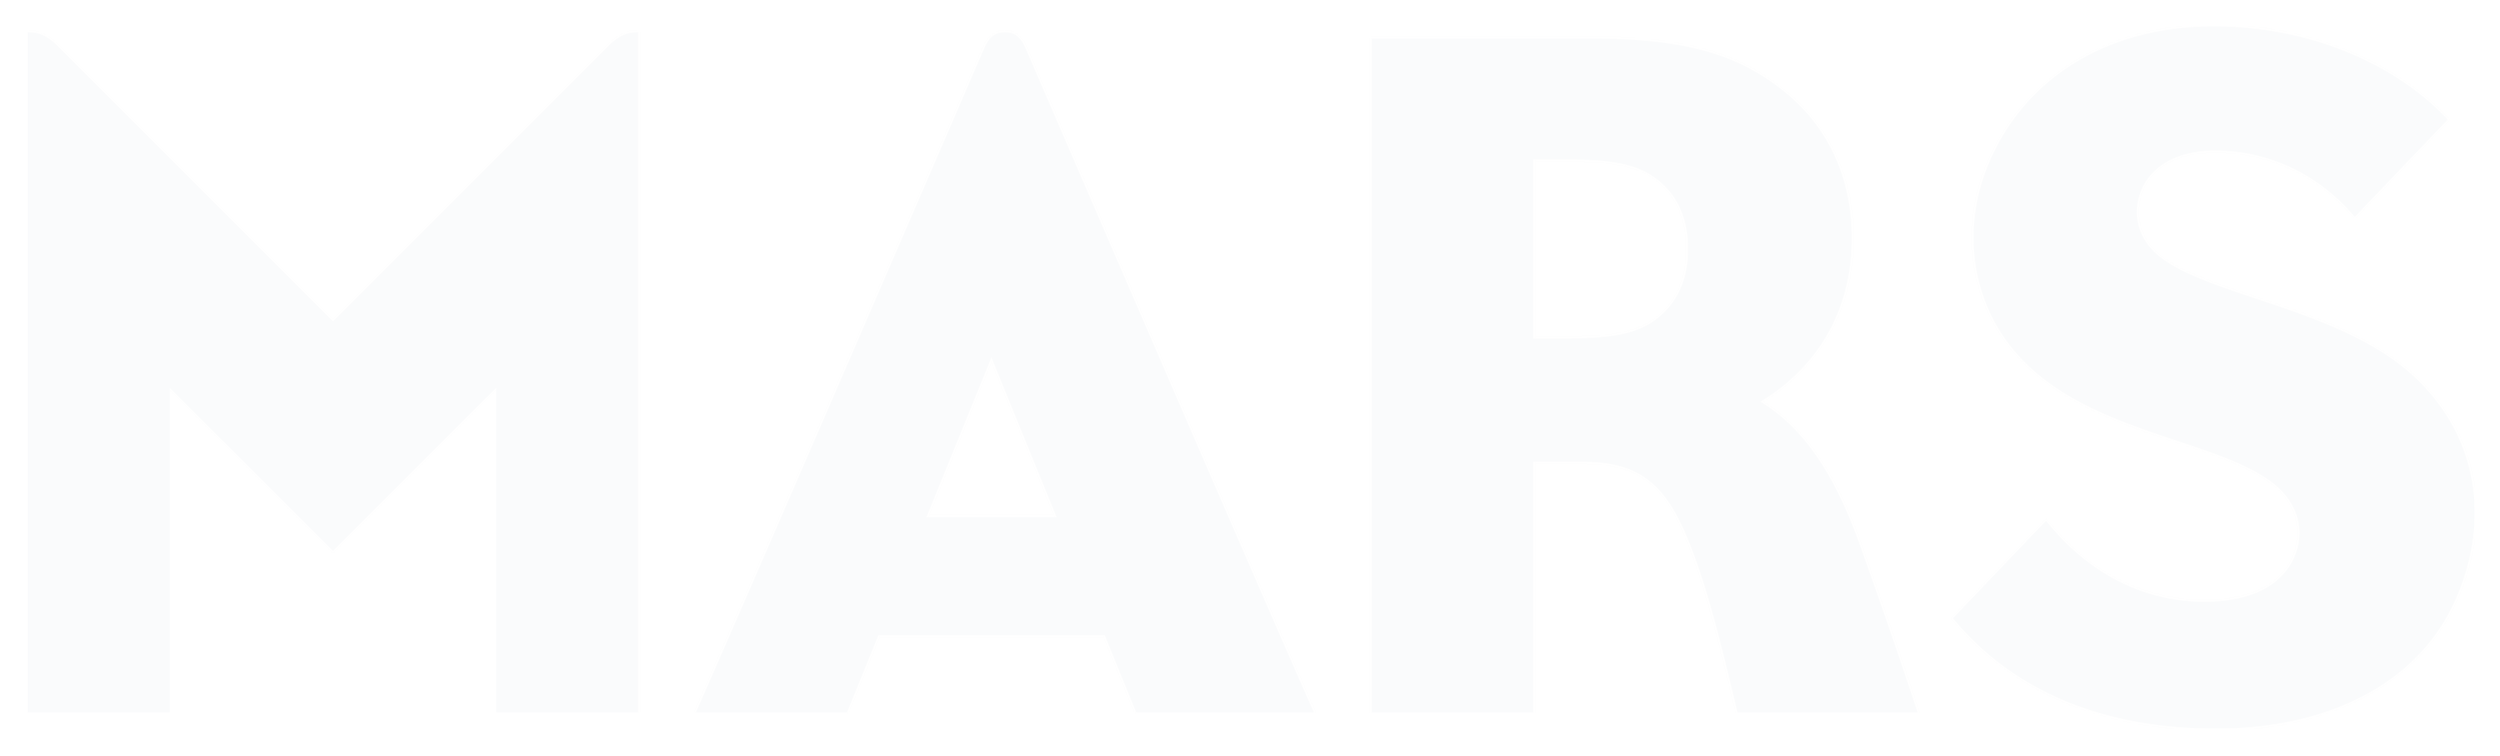 Mars Wordmark RGB white logo.png